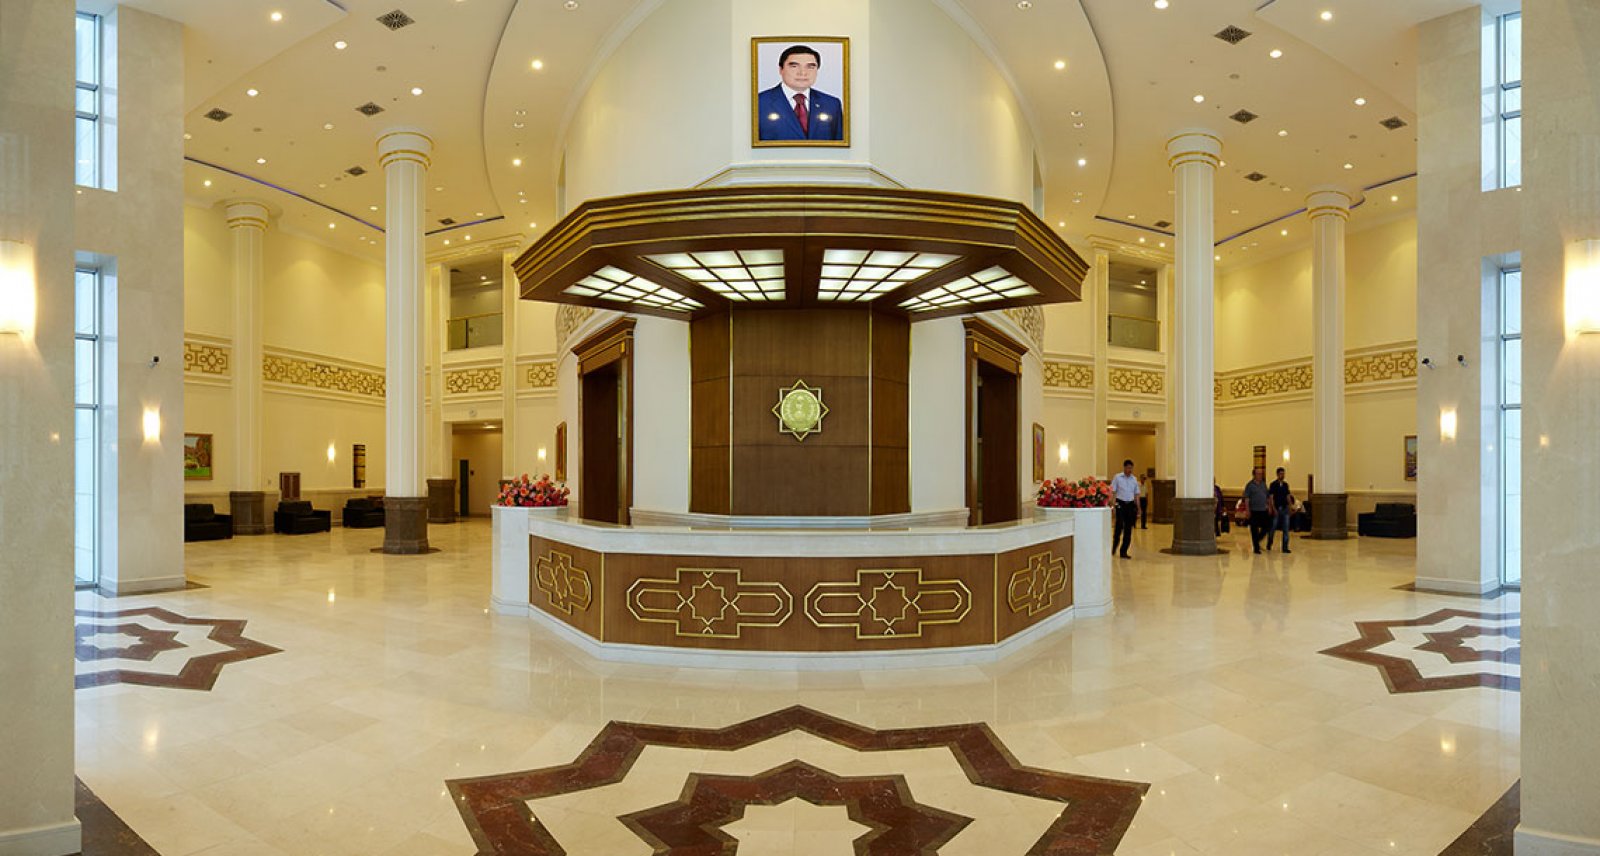 Onkoloji Hastanesi, Türkmenistan